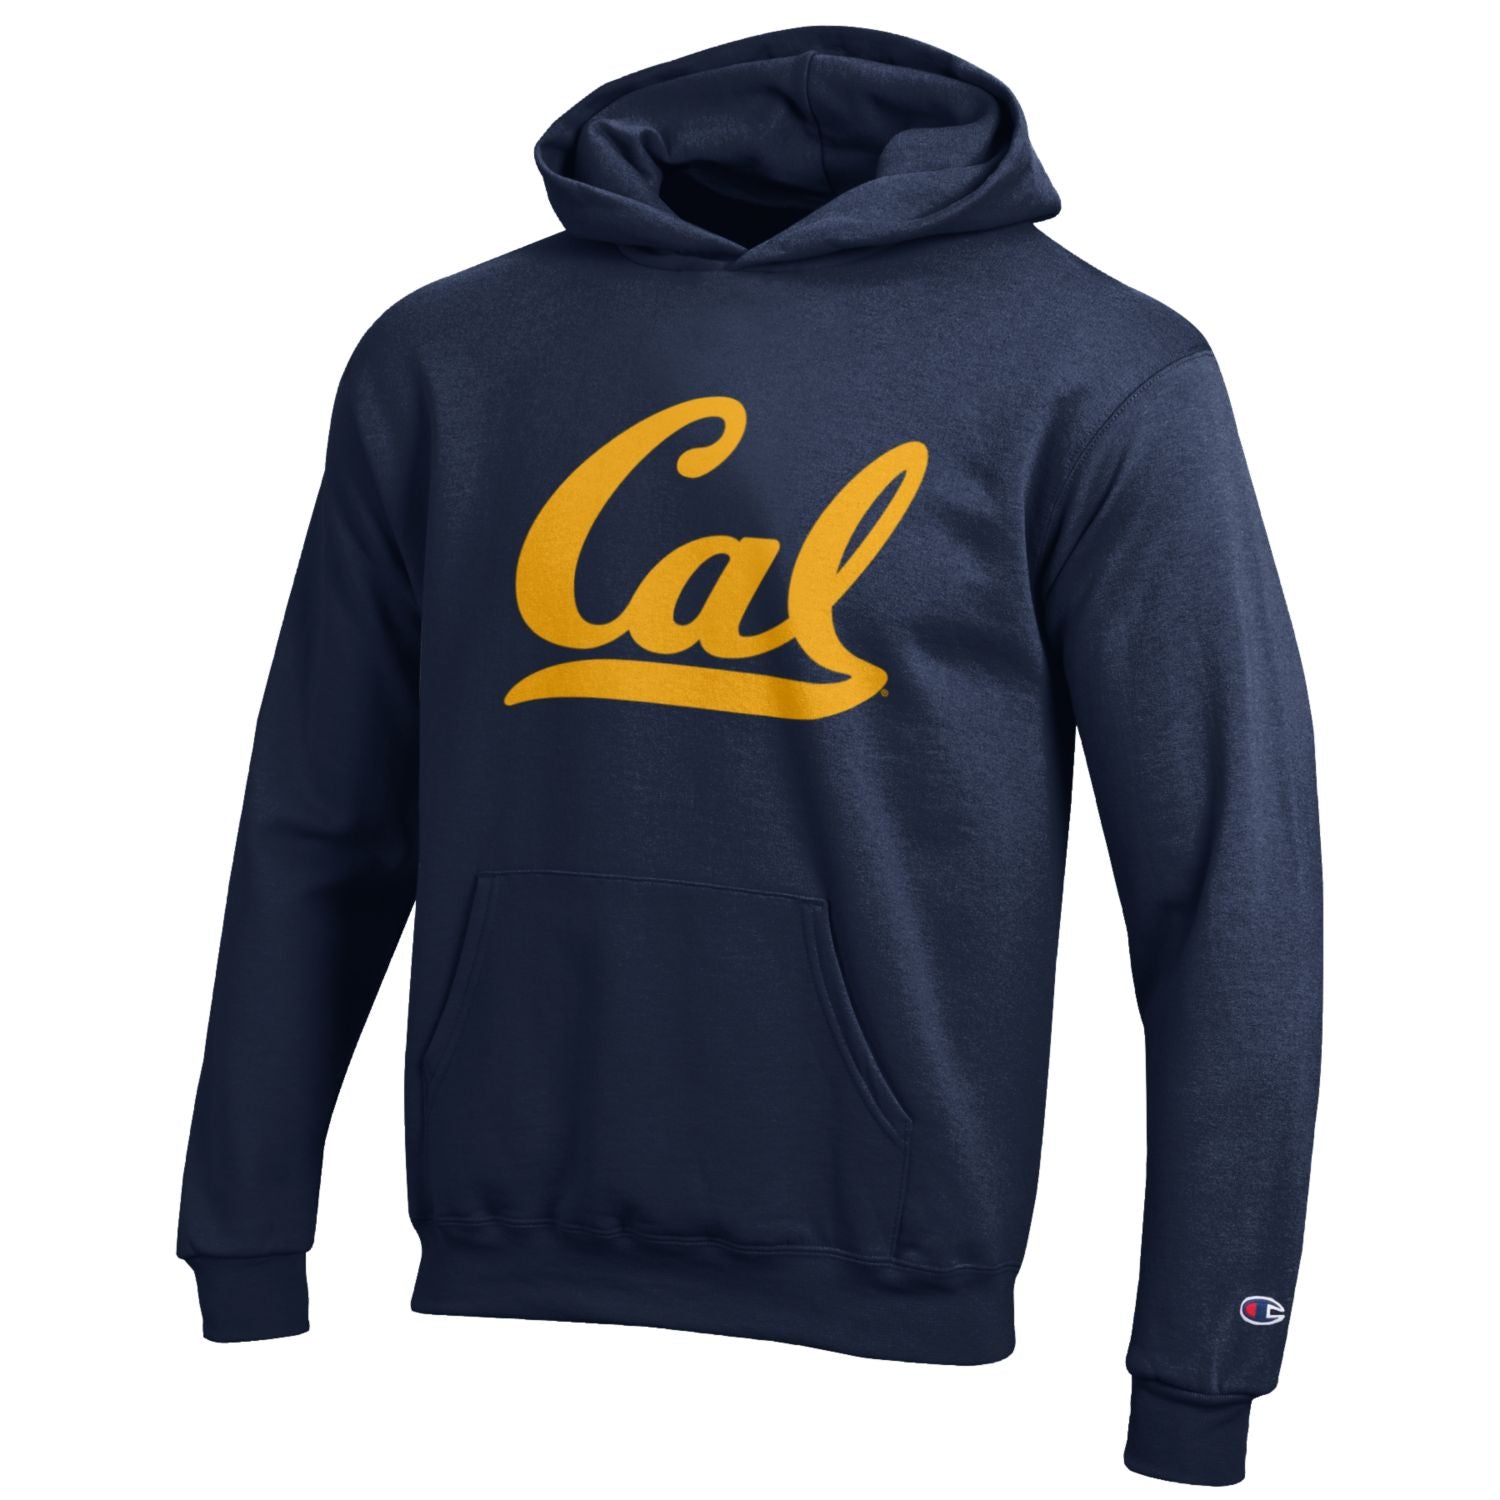 UC Berkeley Cal Champion Youth Hoodie Sweatshirt-Navy-Shop College Wear